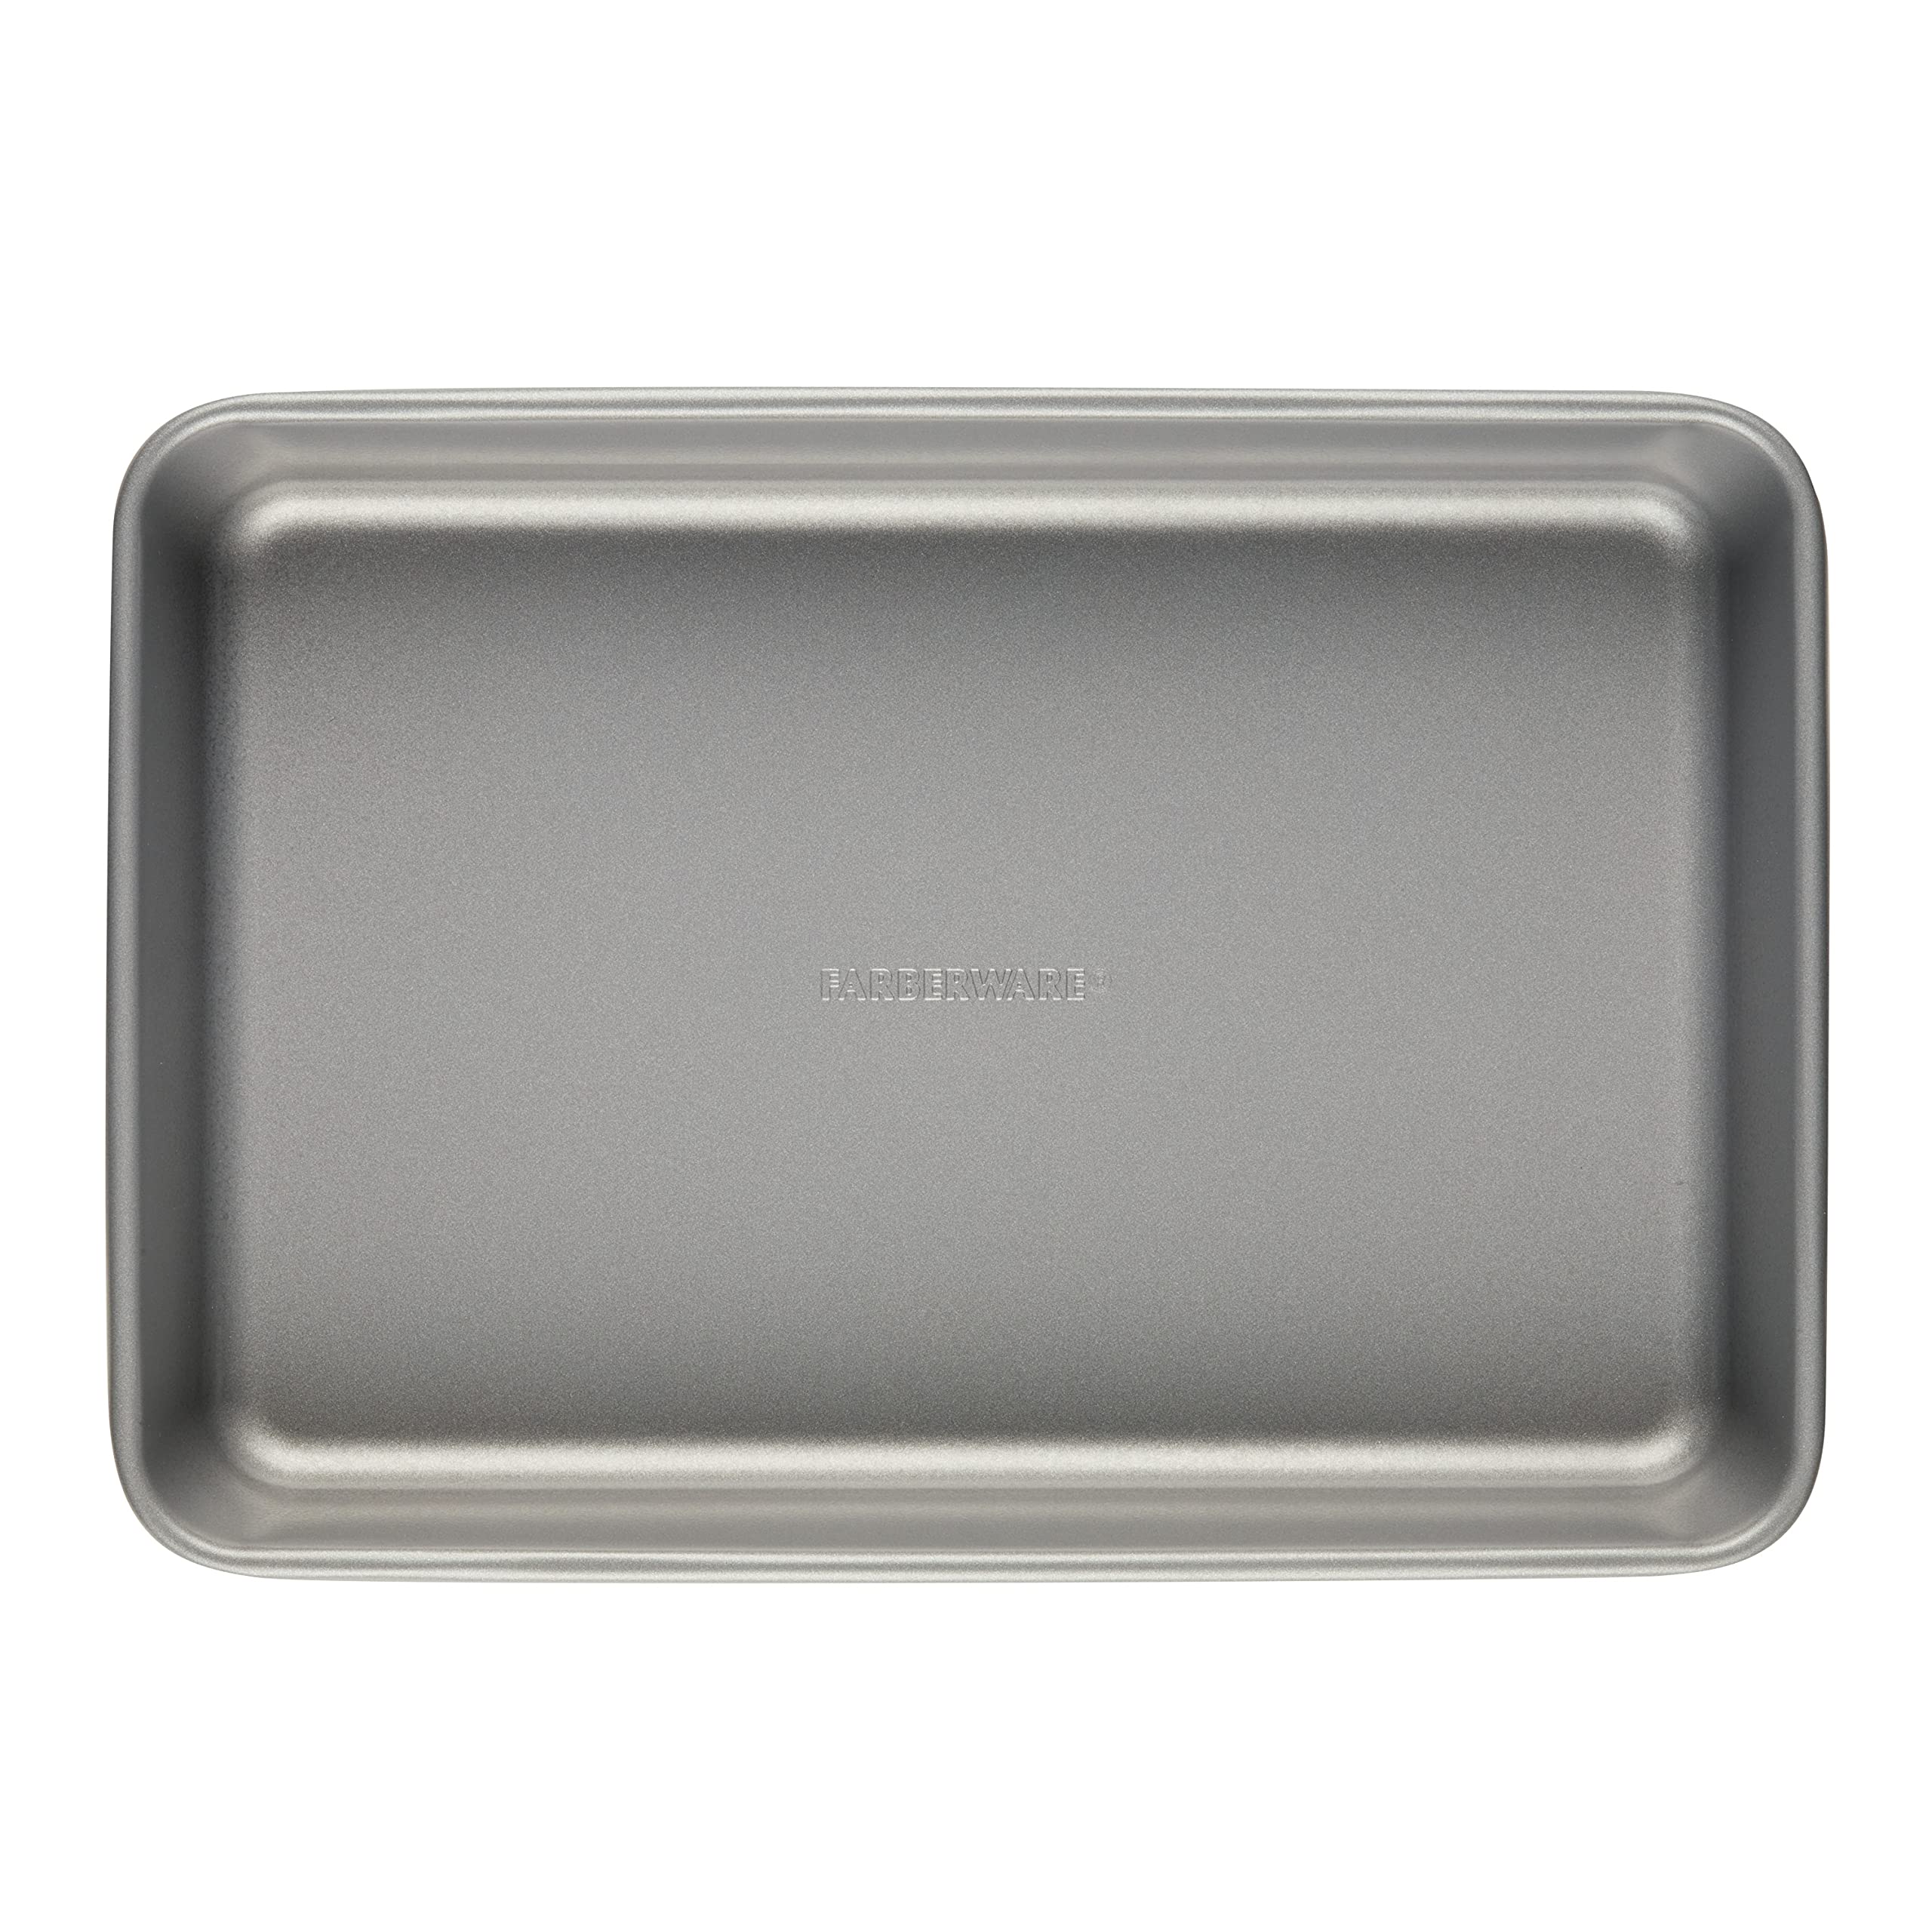 Farberware Bakeware Steel Nonstick Toaster Oven Pan Set, 4-Piece Baking Set, Gray